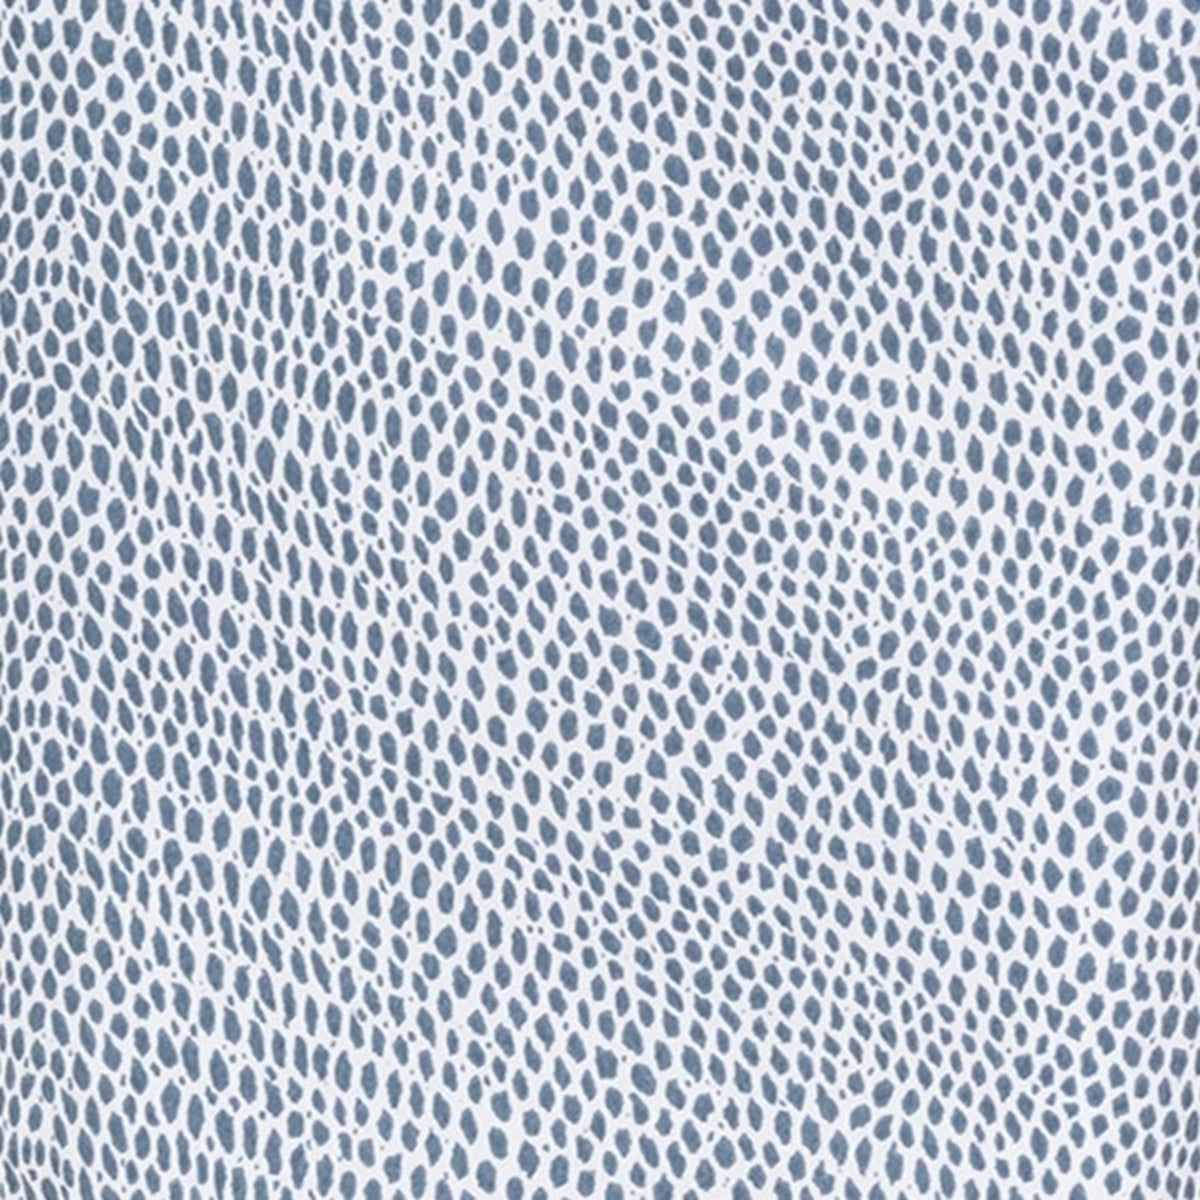 Swatch Sample of Matouk Jasper Tissue Box Cover in Steel Blue Color